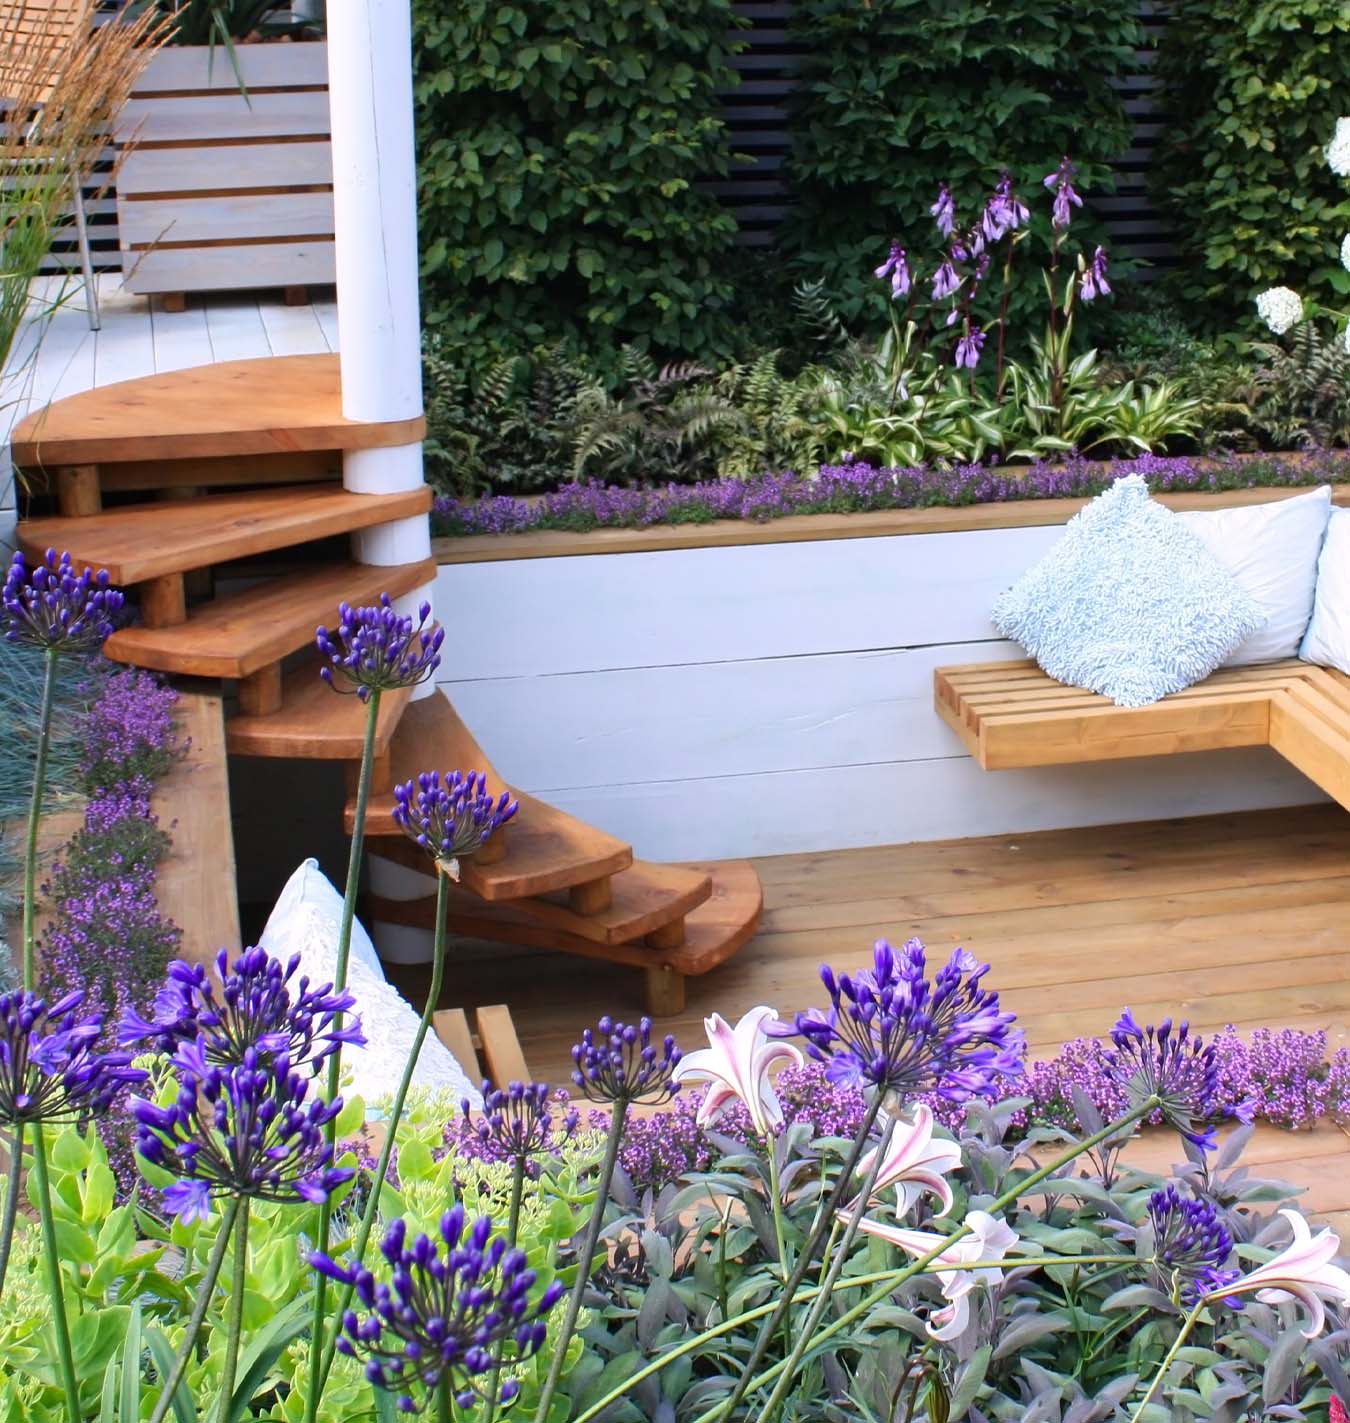 Salisbury Greenhouse-purple flowers and staircase garden